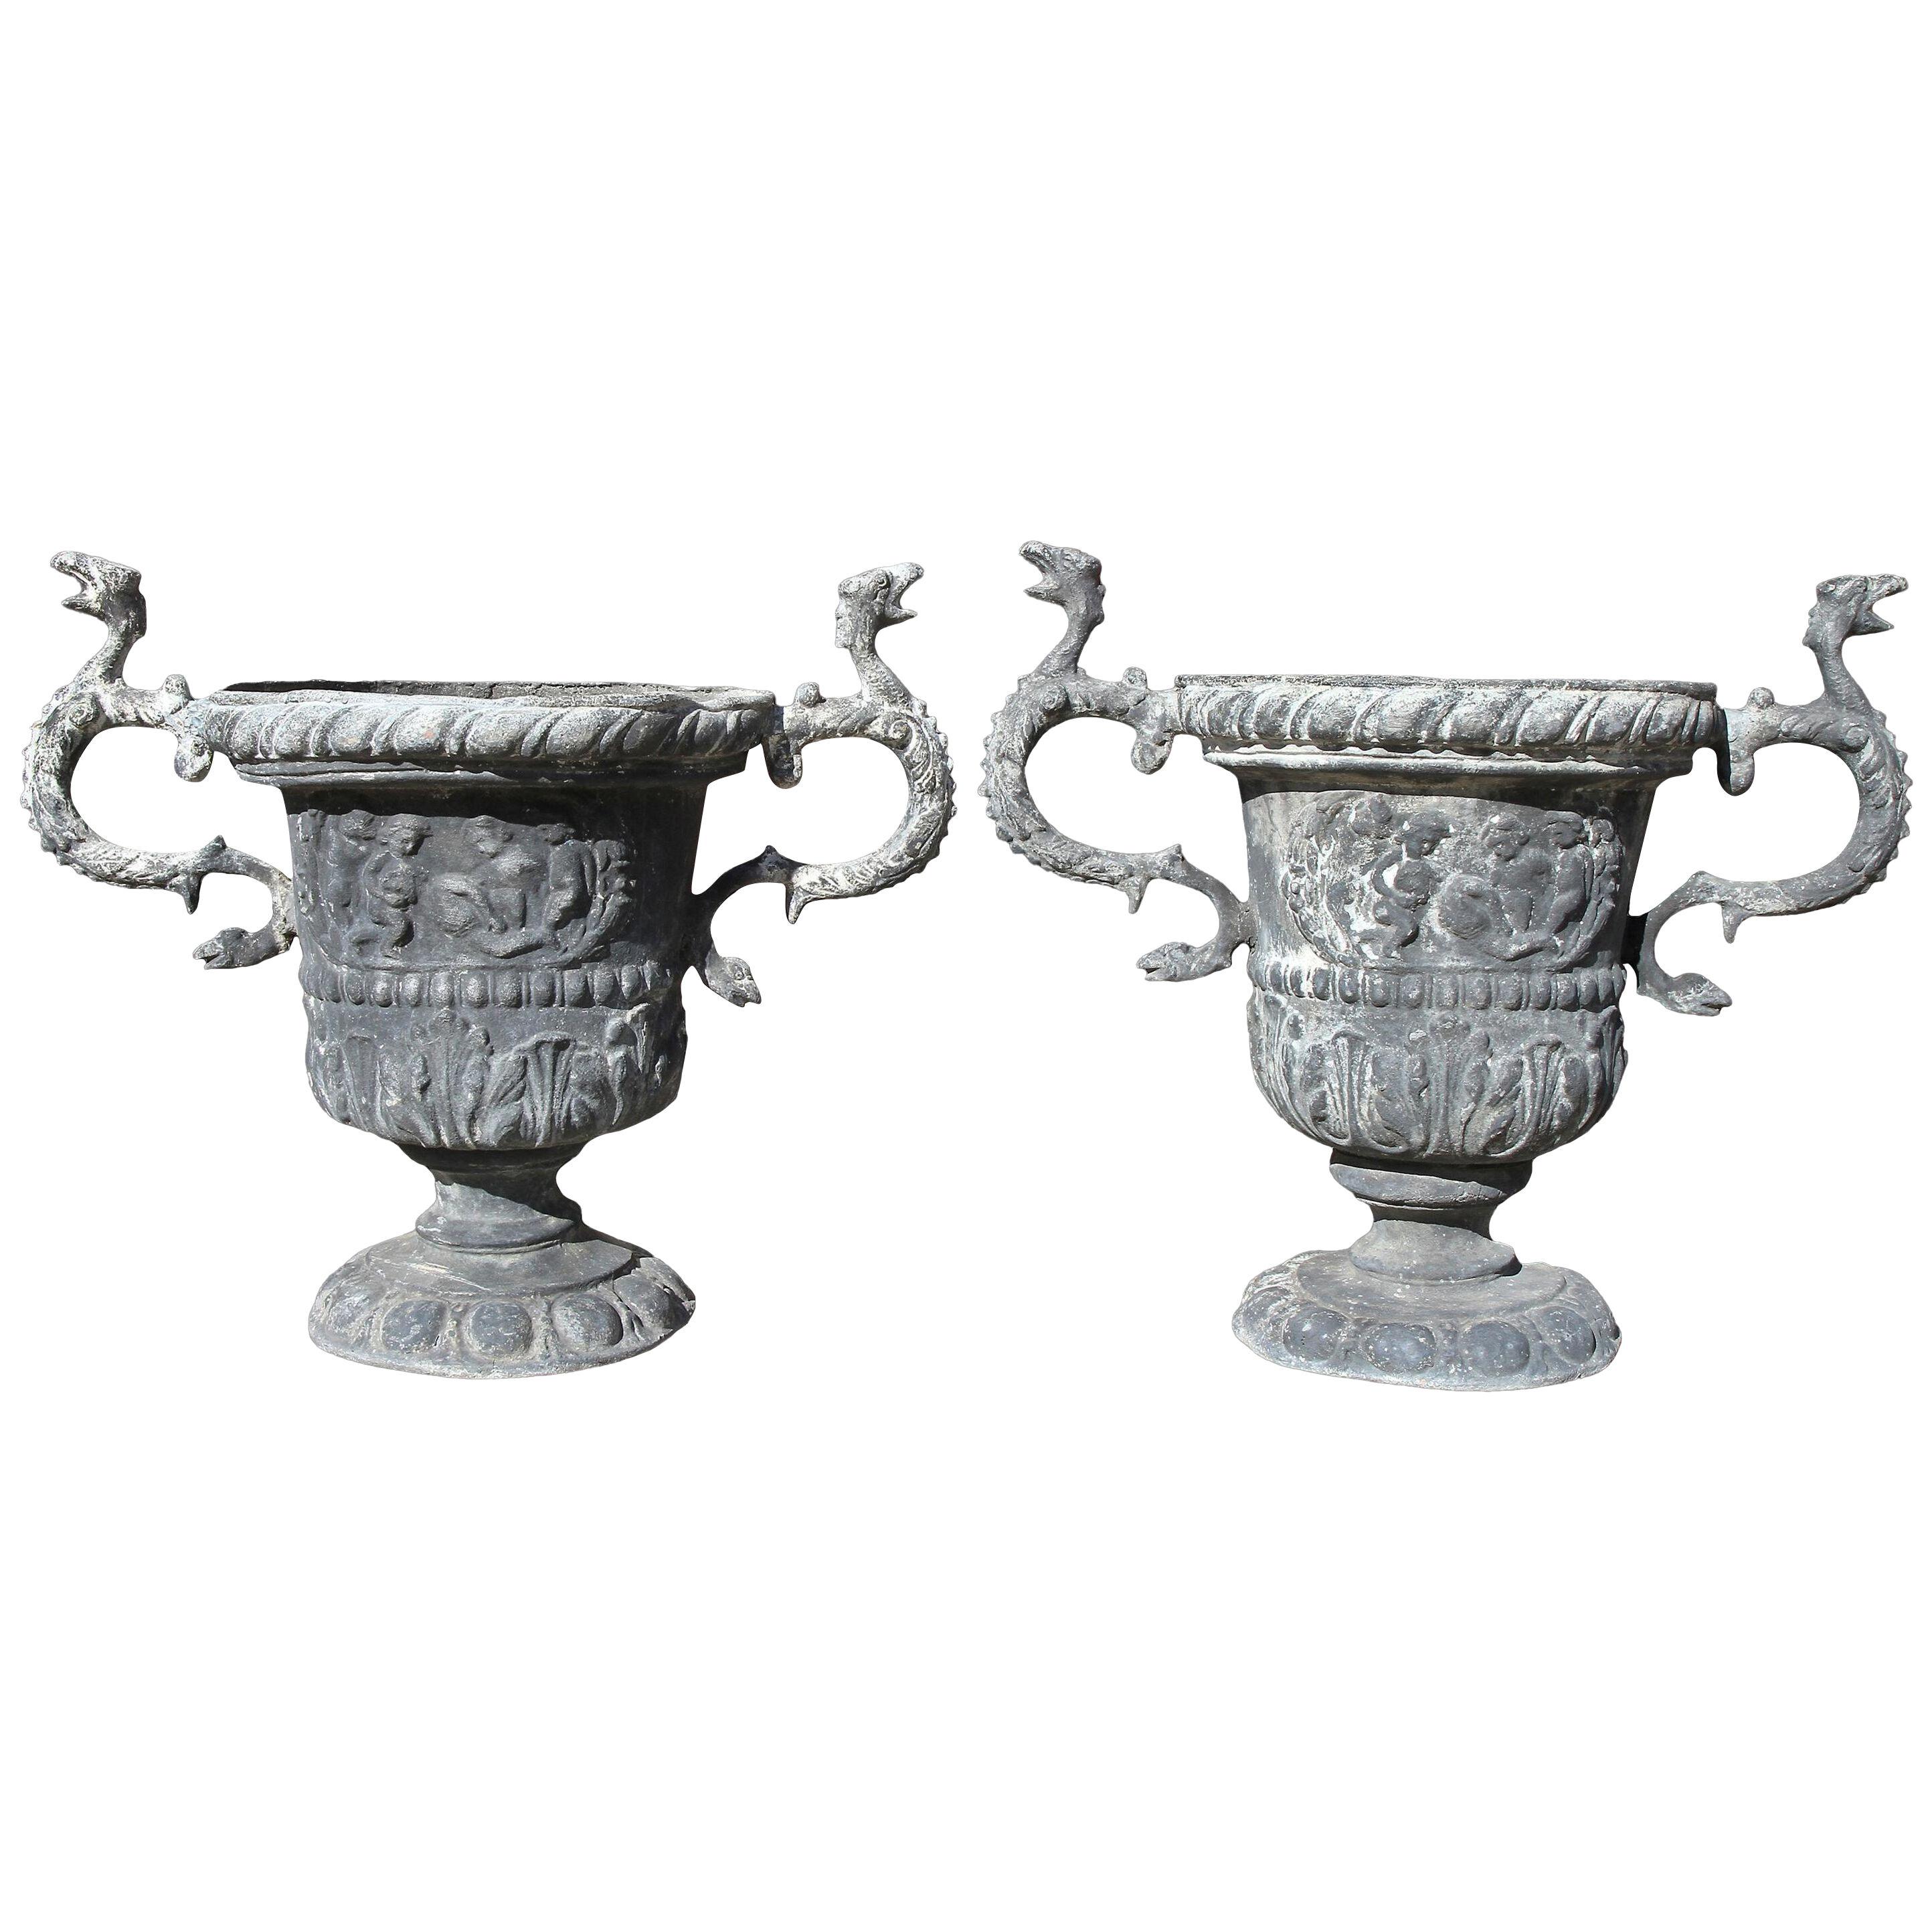 Georgian Lead Two Handled Urns - a Pair